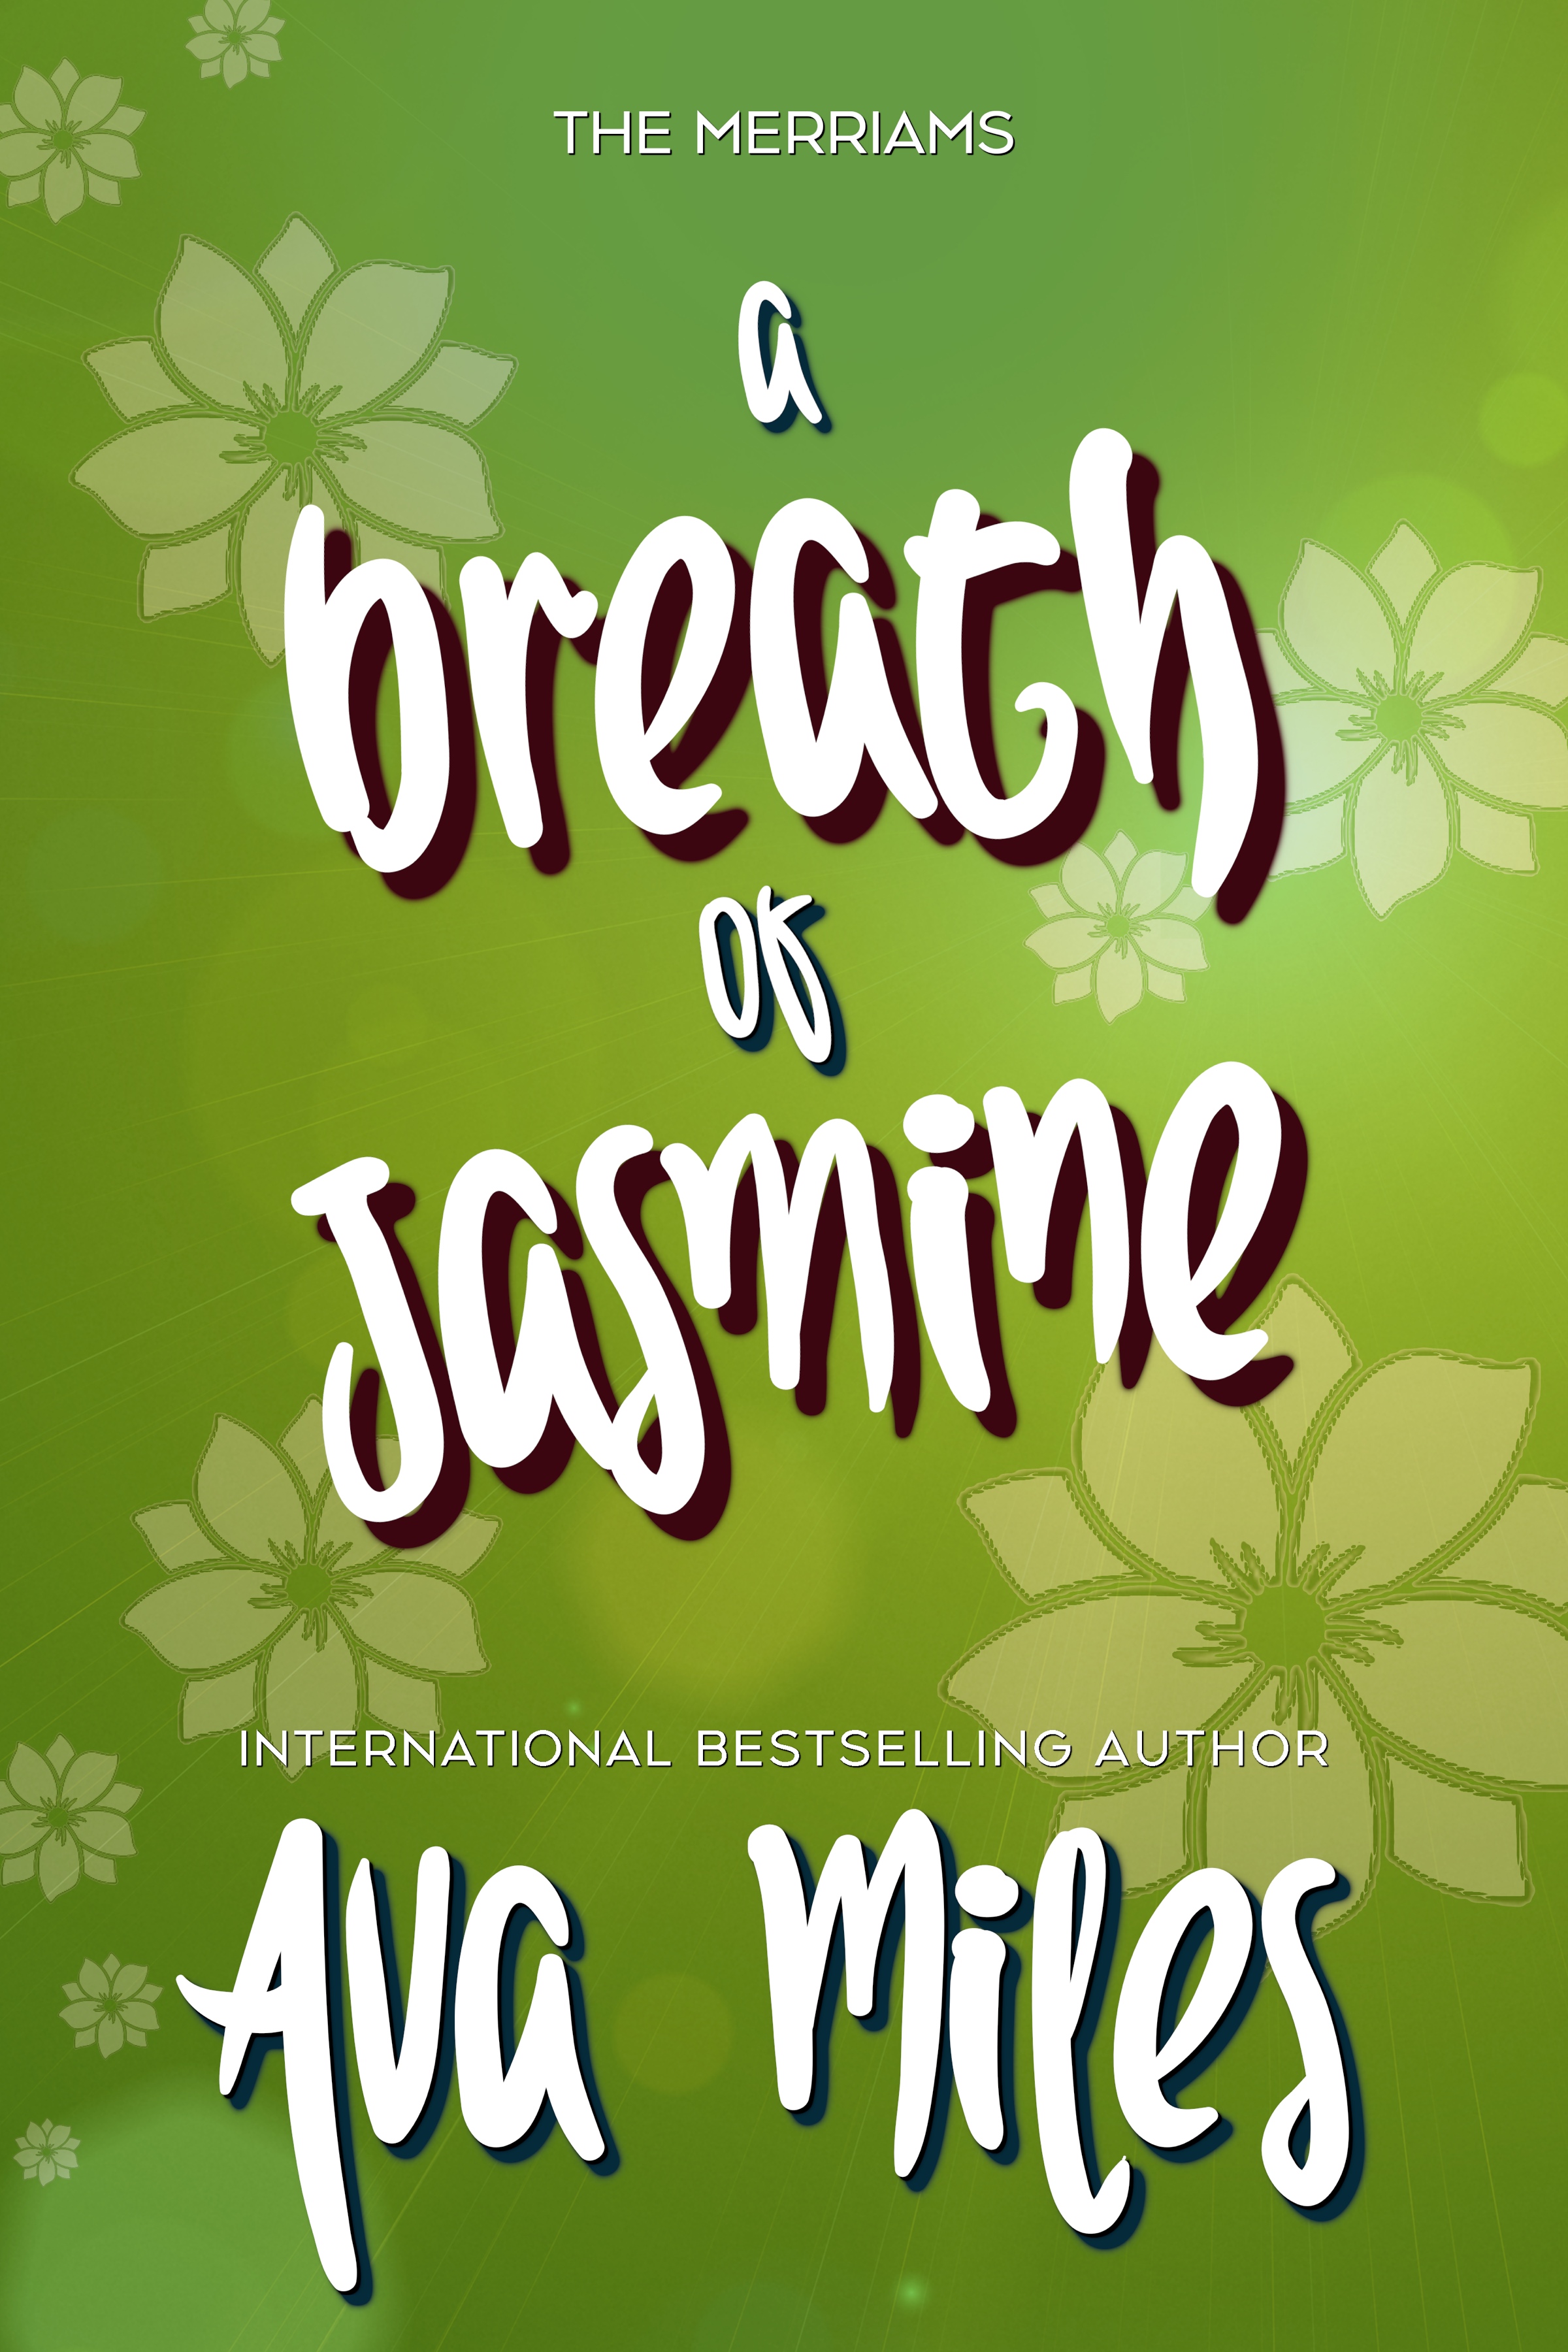 A Breath of Jasmine